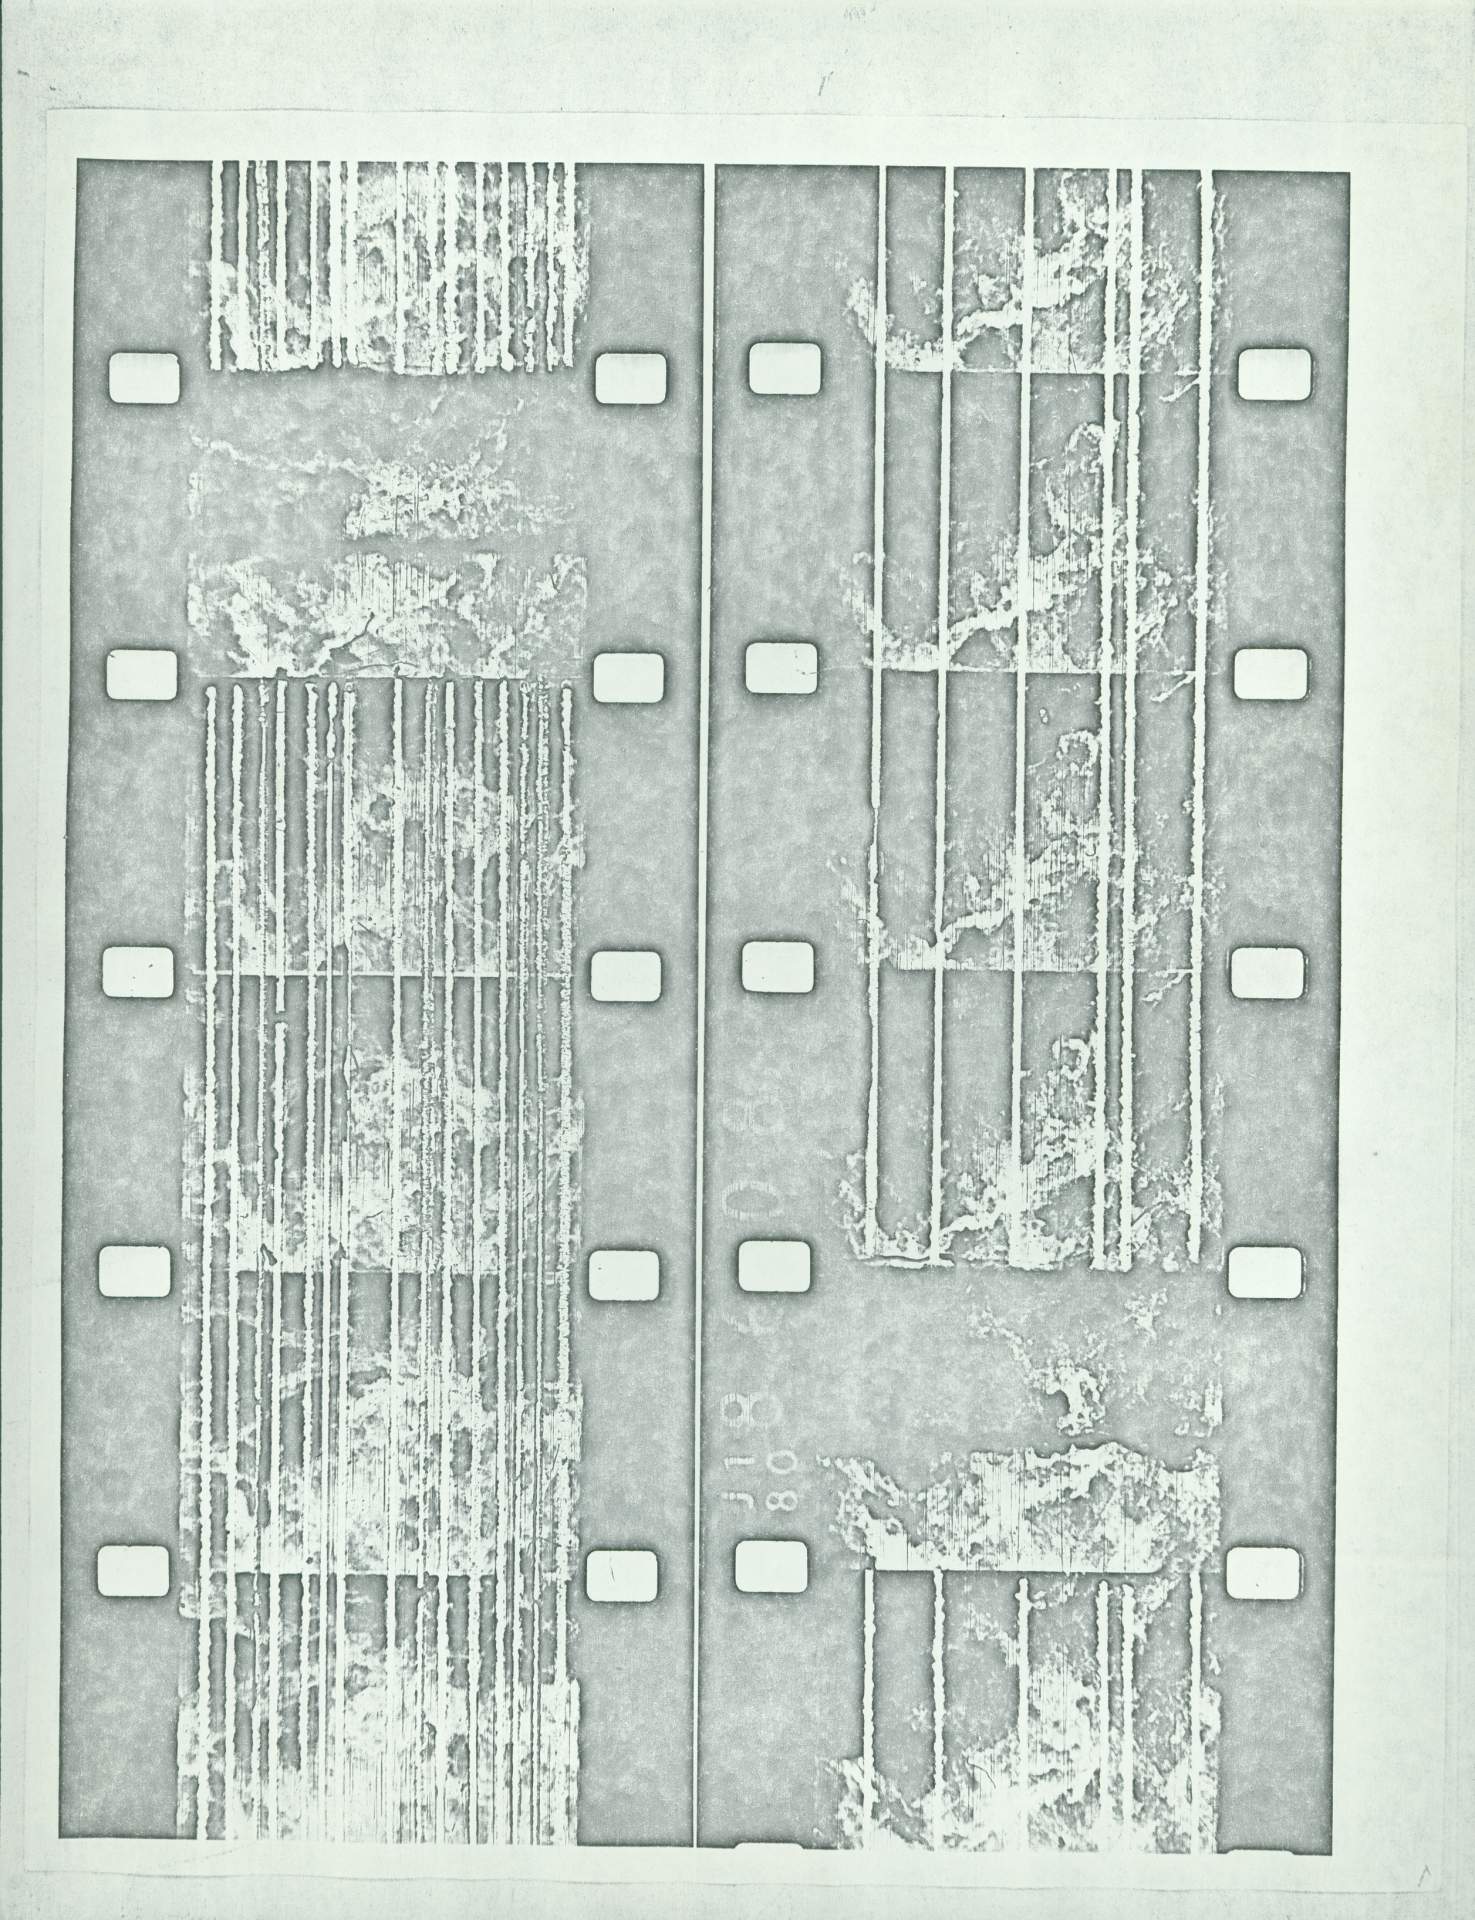 Untitled (photocopy of film fragments)